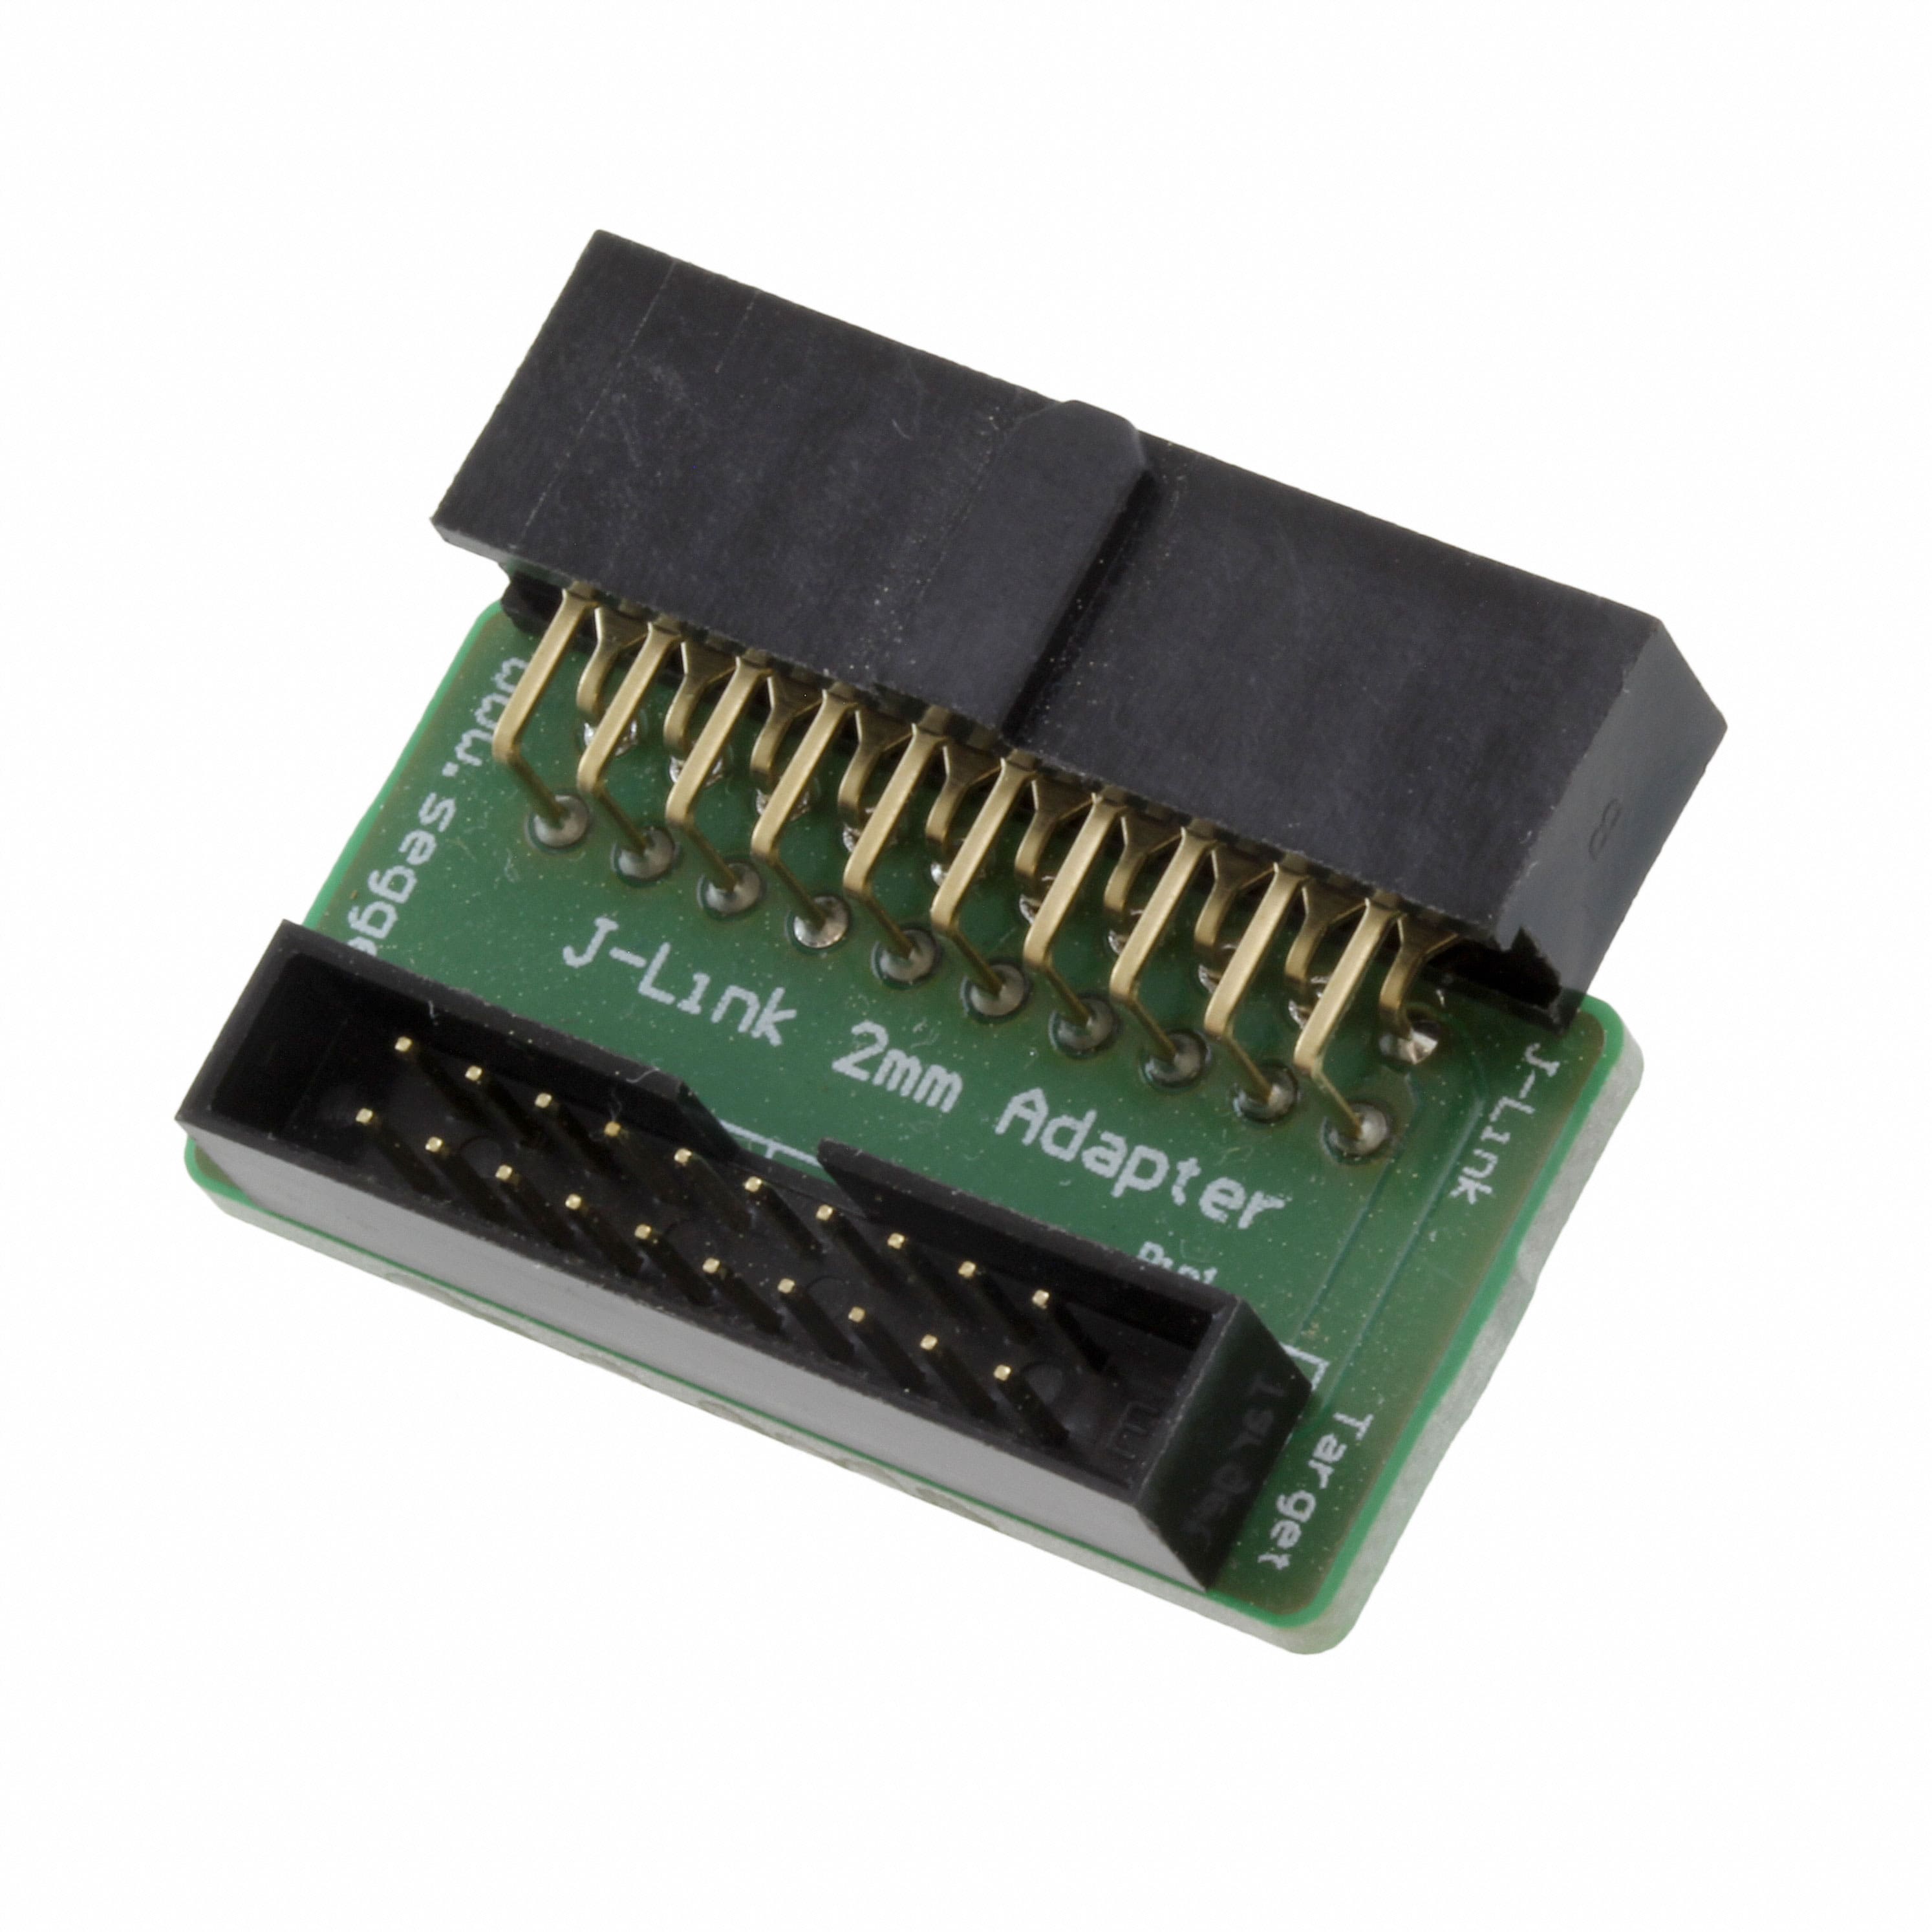 8.06.11 J-LINK 2MM ADAPTER Segger Microcontroller Systems                                                                    ADAPTER J-LINK 2MM ADAPTER